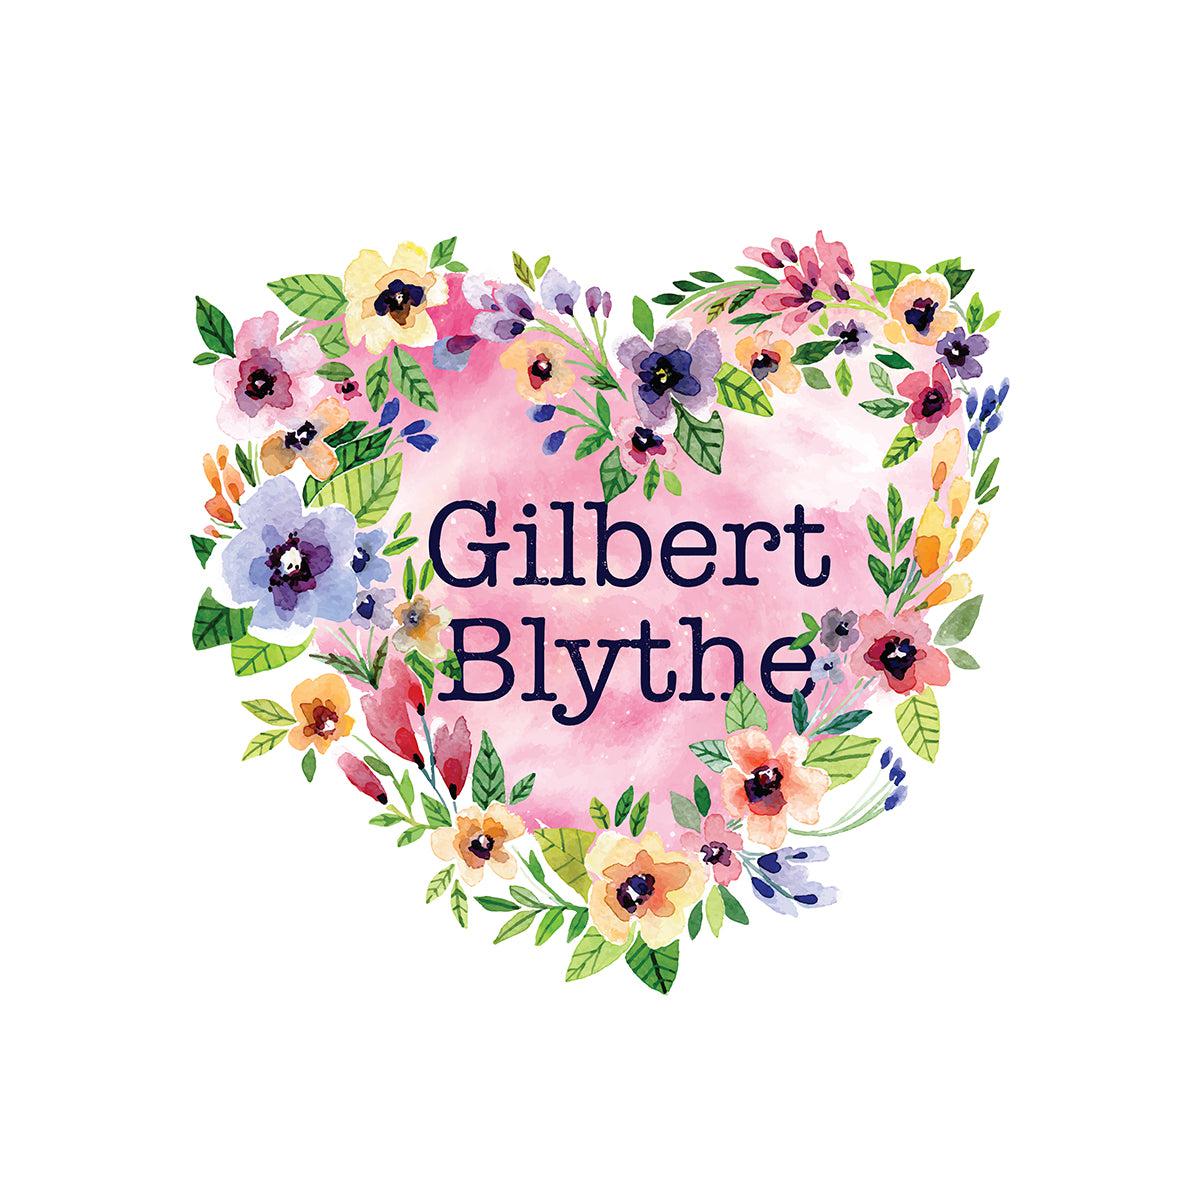 "Gilbert Blythe Forever Fan" Crew Neck Sweatshirt